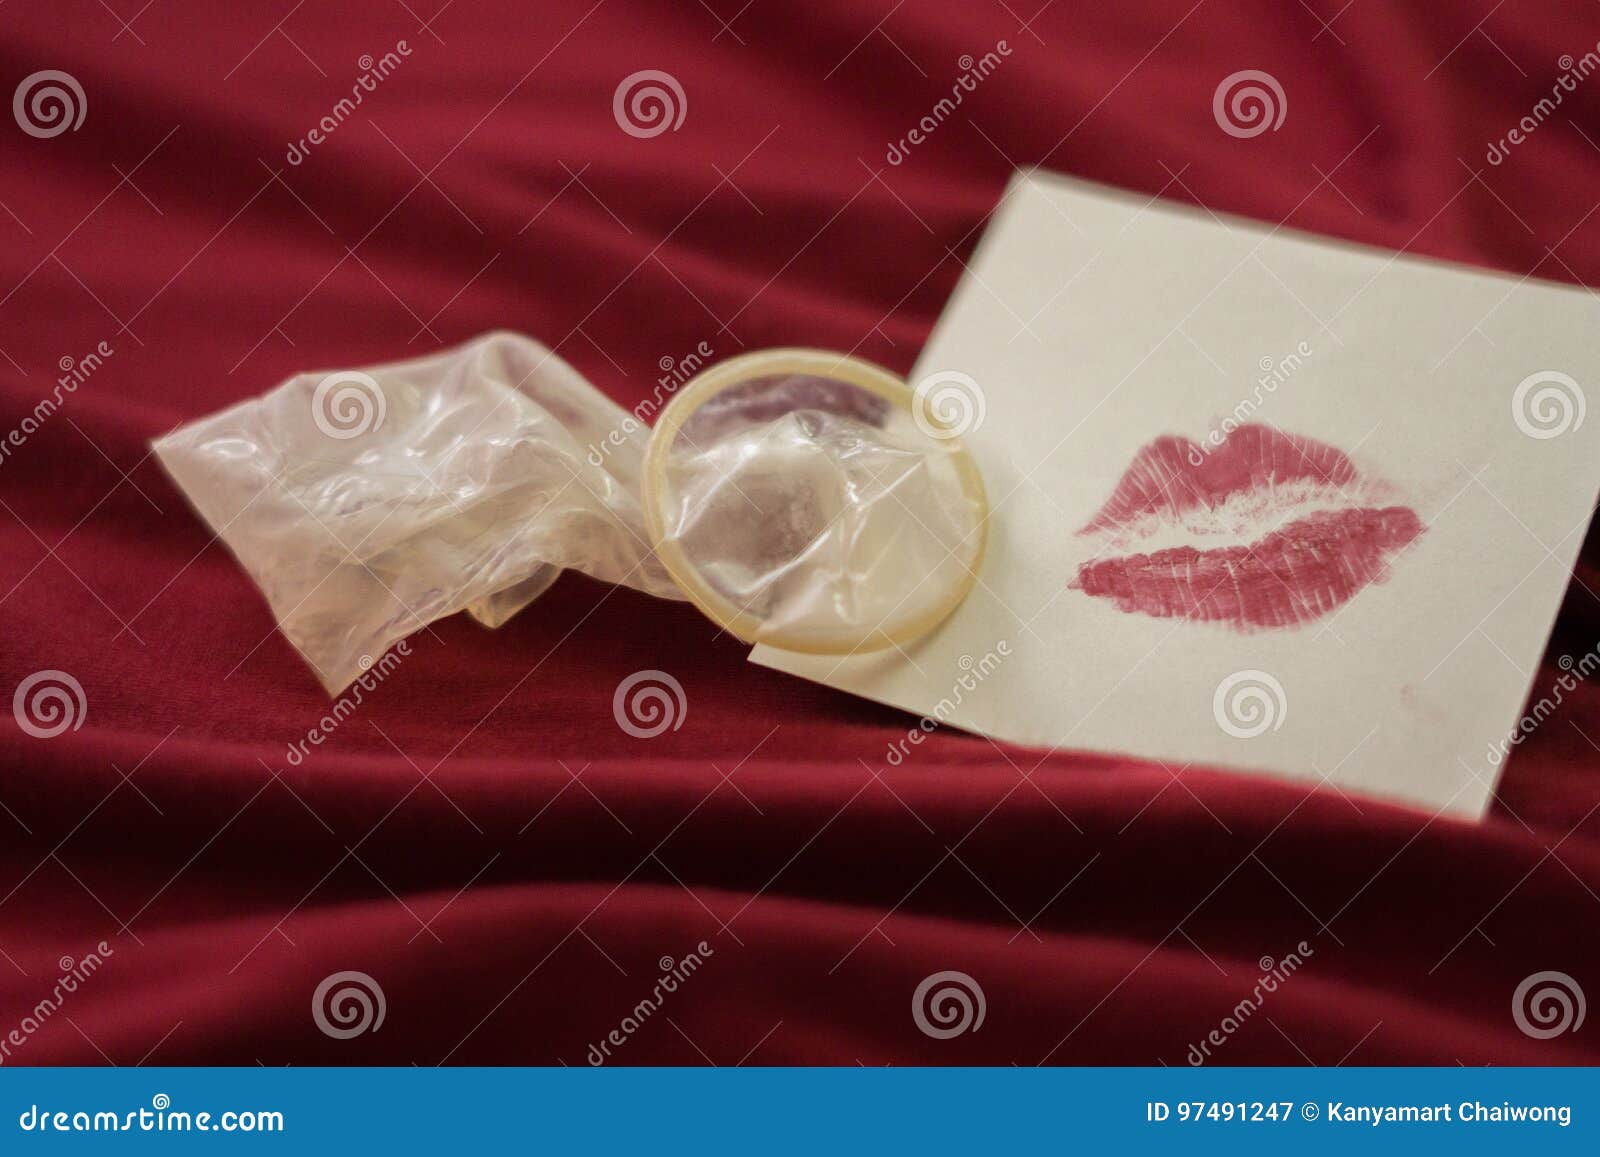 принесла в презервативе сперму любовника фото 24